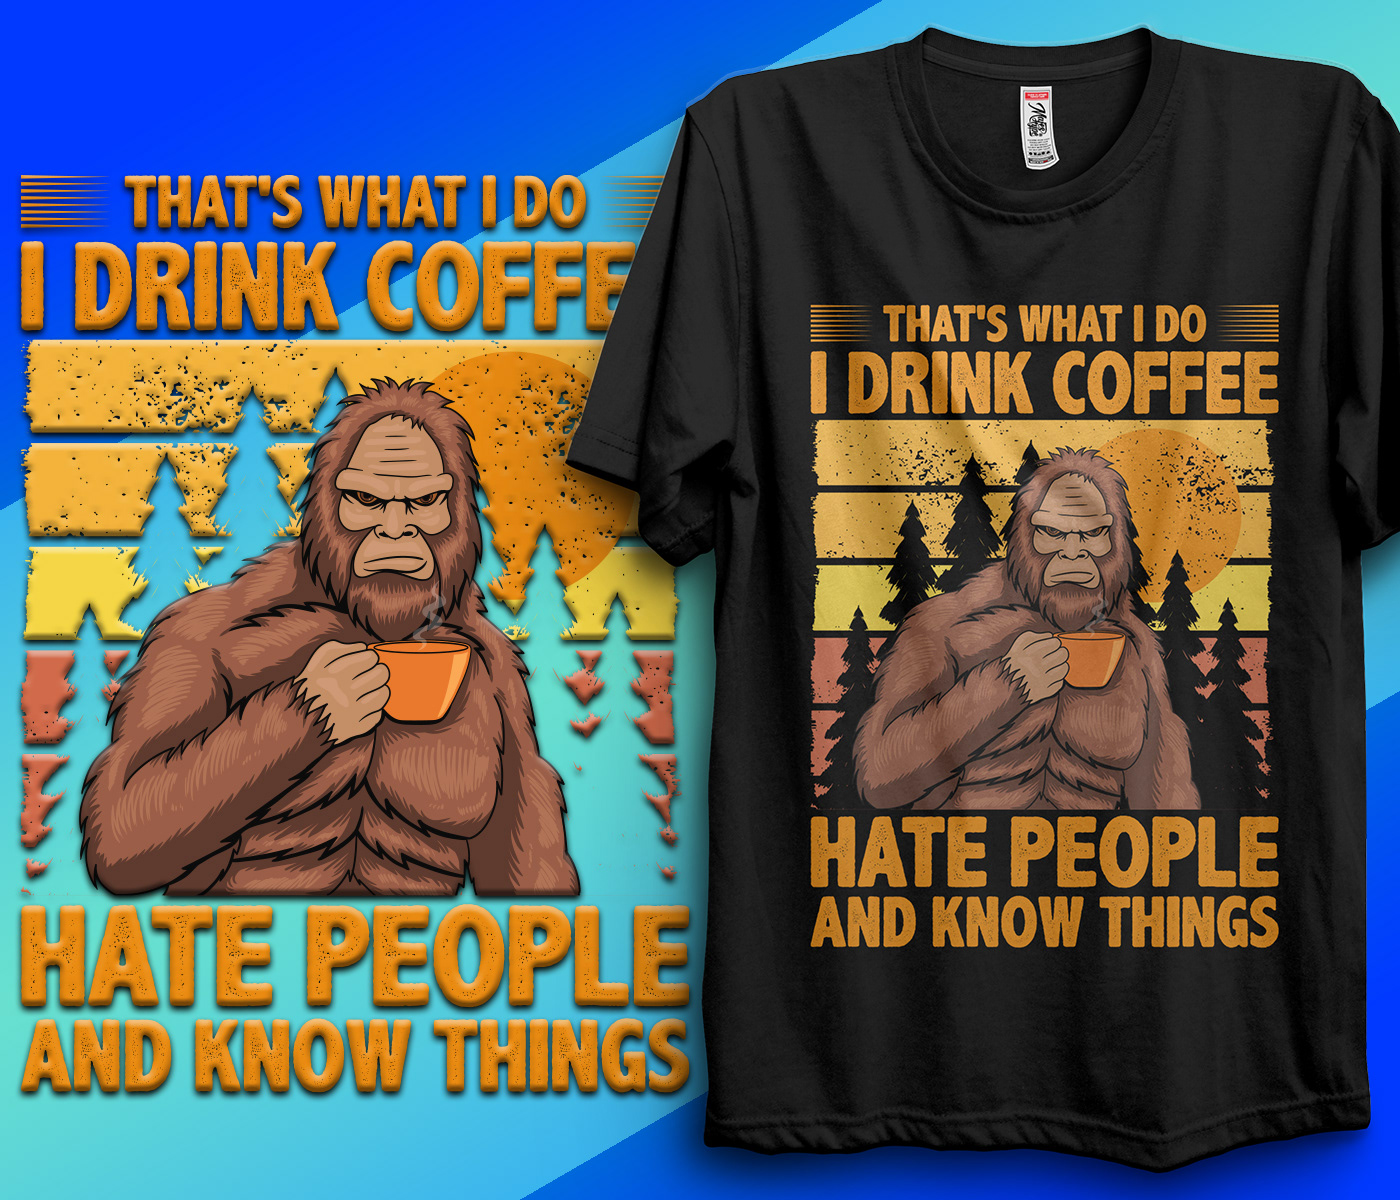 Drink Coffee T-shirt Design